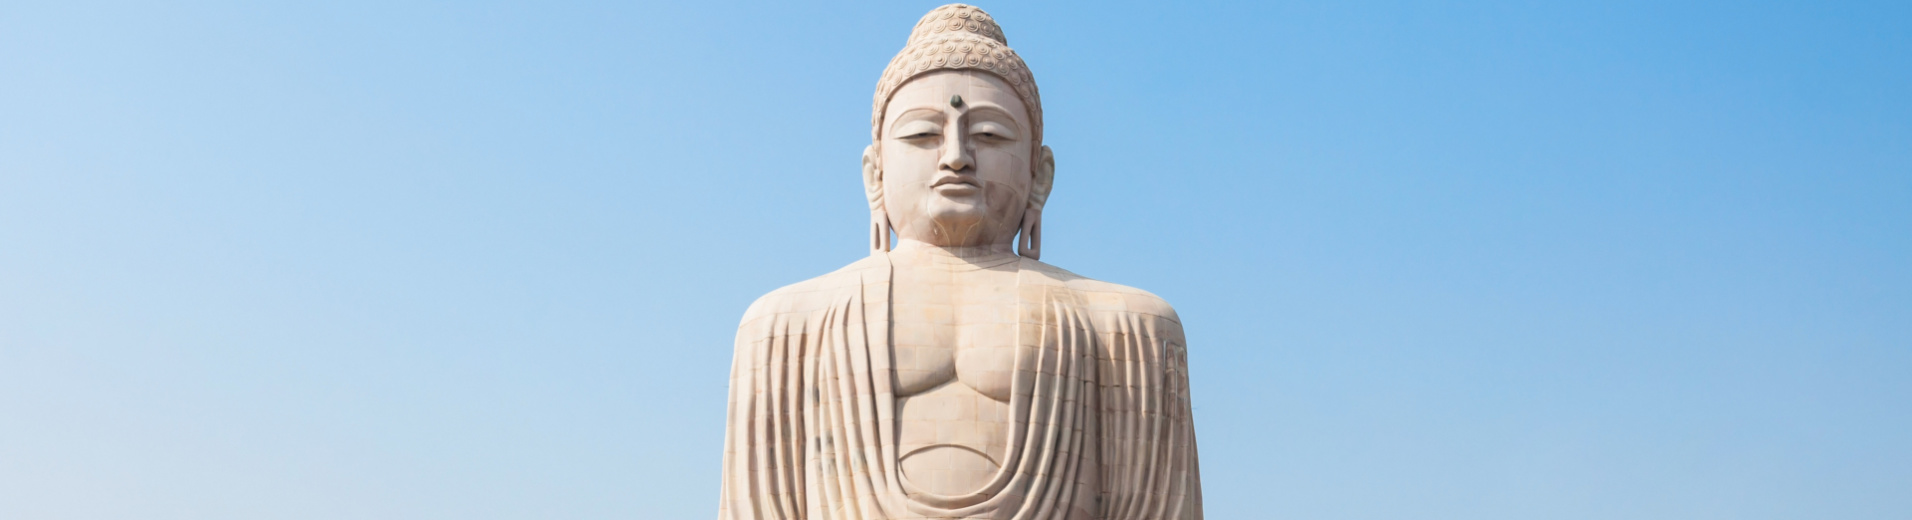 Mahabodhi-Temple-Bodhgaya